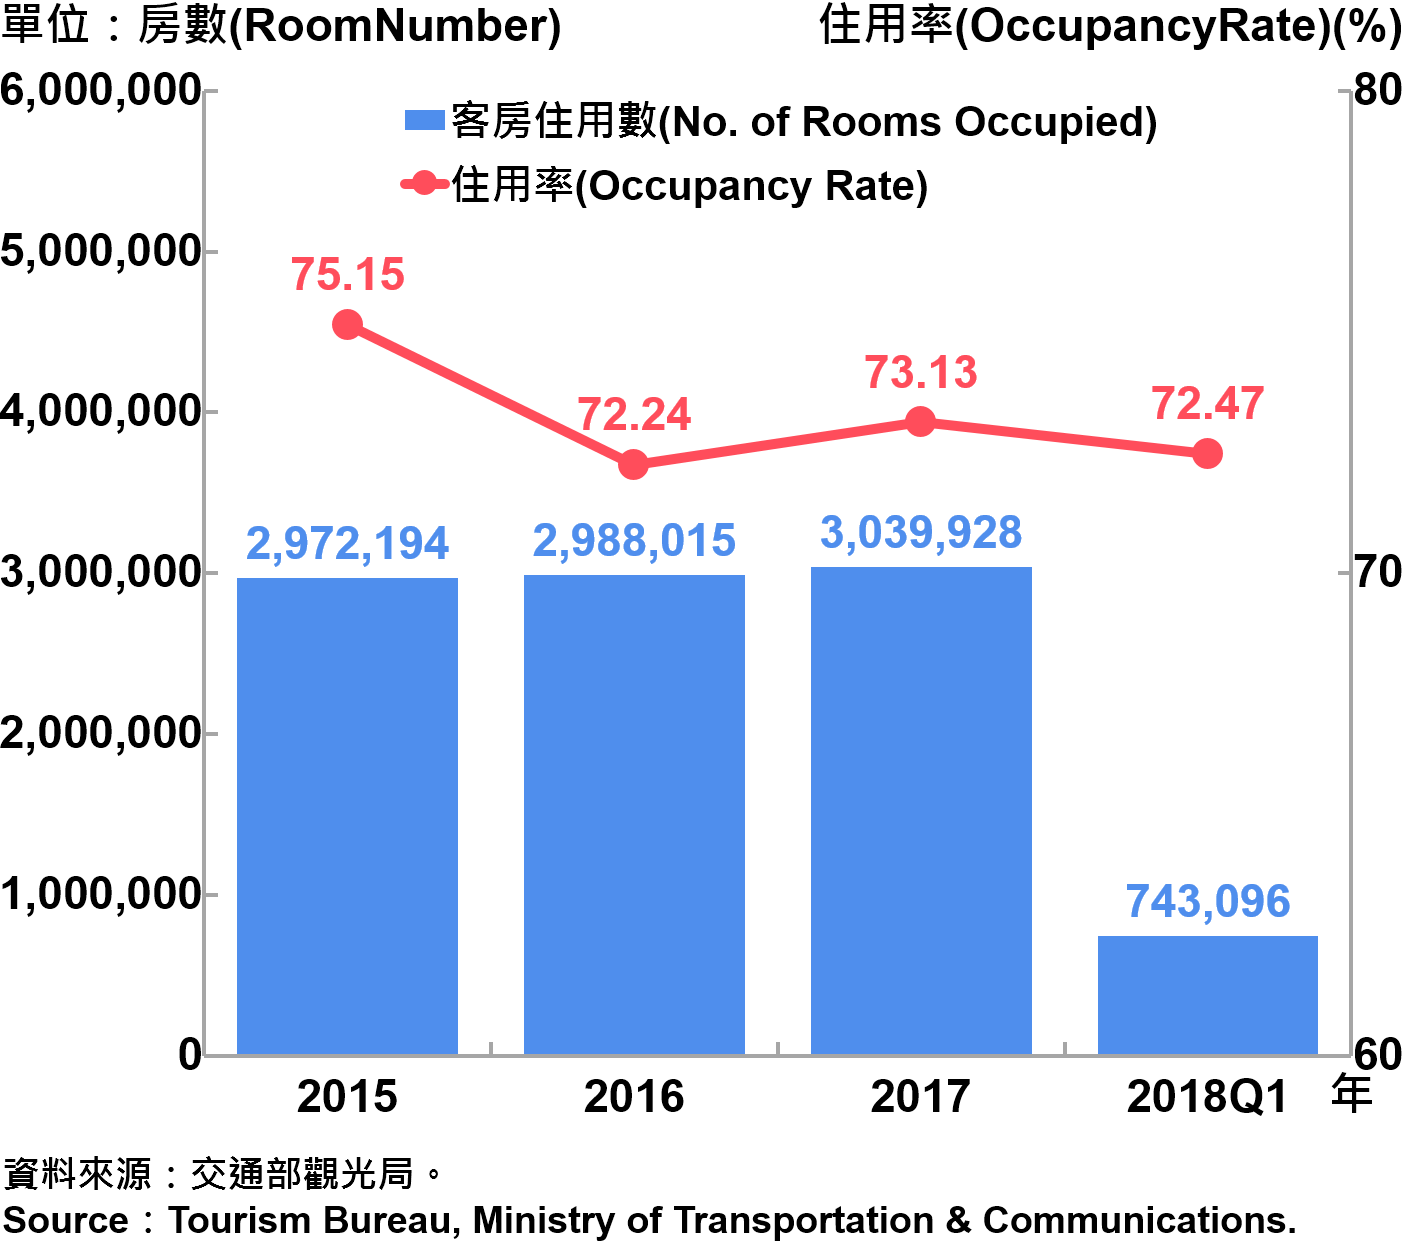 臺北市觀光旅館客房住用率統計—2018Q1 Occupancy Rate on Tourist Hotel Operations in Taipei City—2018Q1